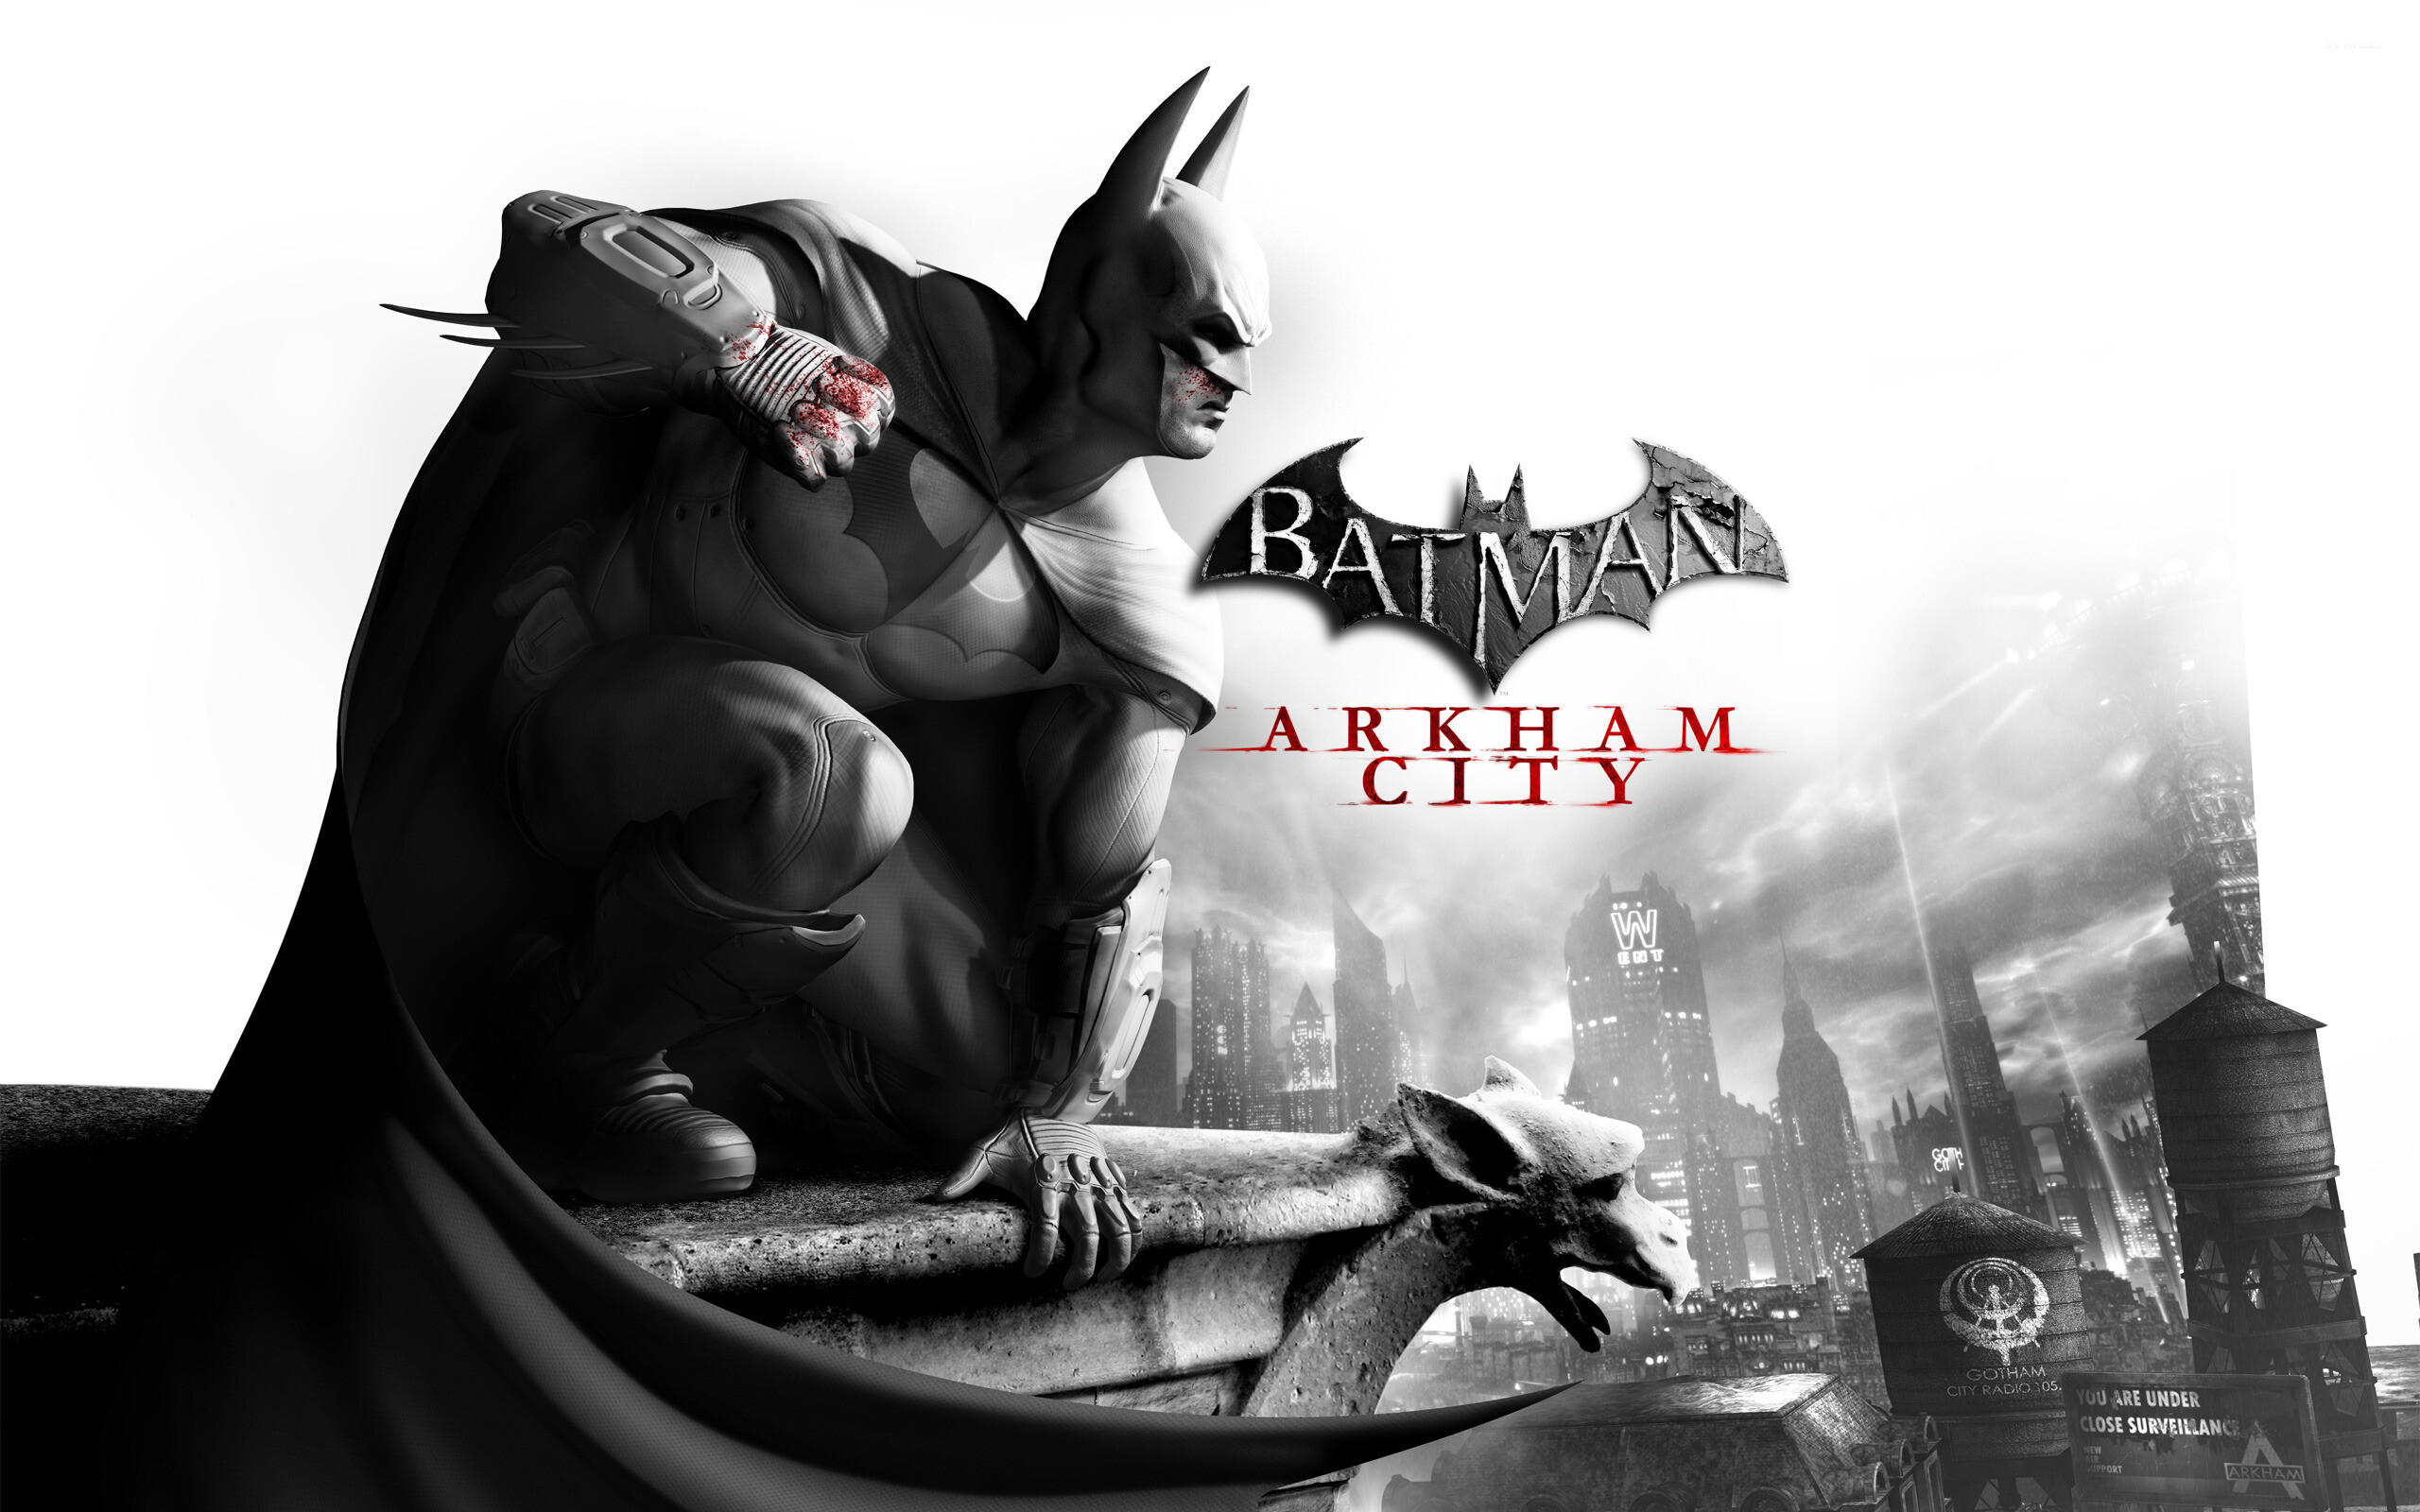 Batman: Arkham City: The second installment in the Arkham series, Game. 2560x1600 HD Wallpaper.